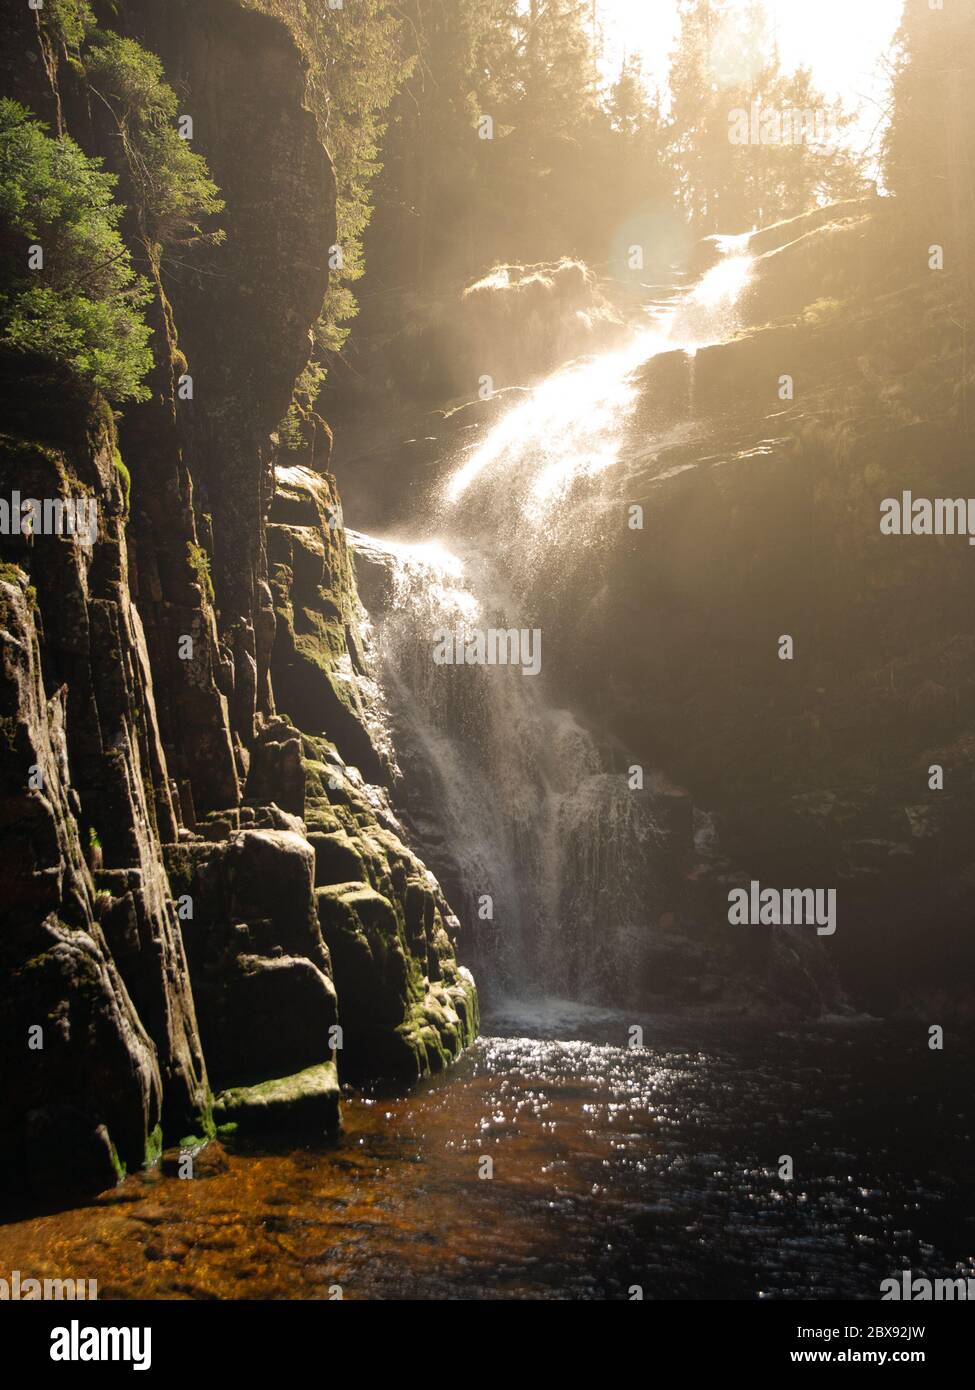 Cascata di Kamienczyk vicino SzklarskaPoreba in montagna Gigante o Karkonosze, Polonia. Esposizione prolungata. Foto Stock